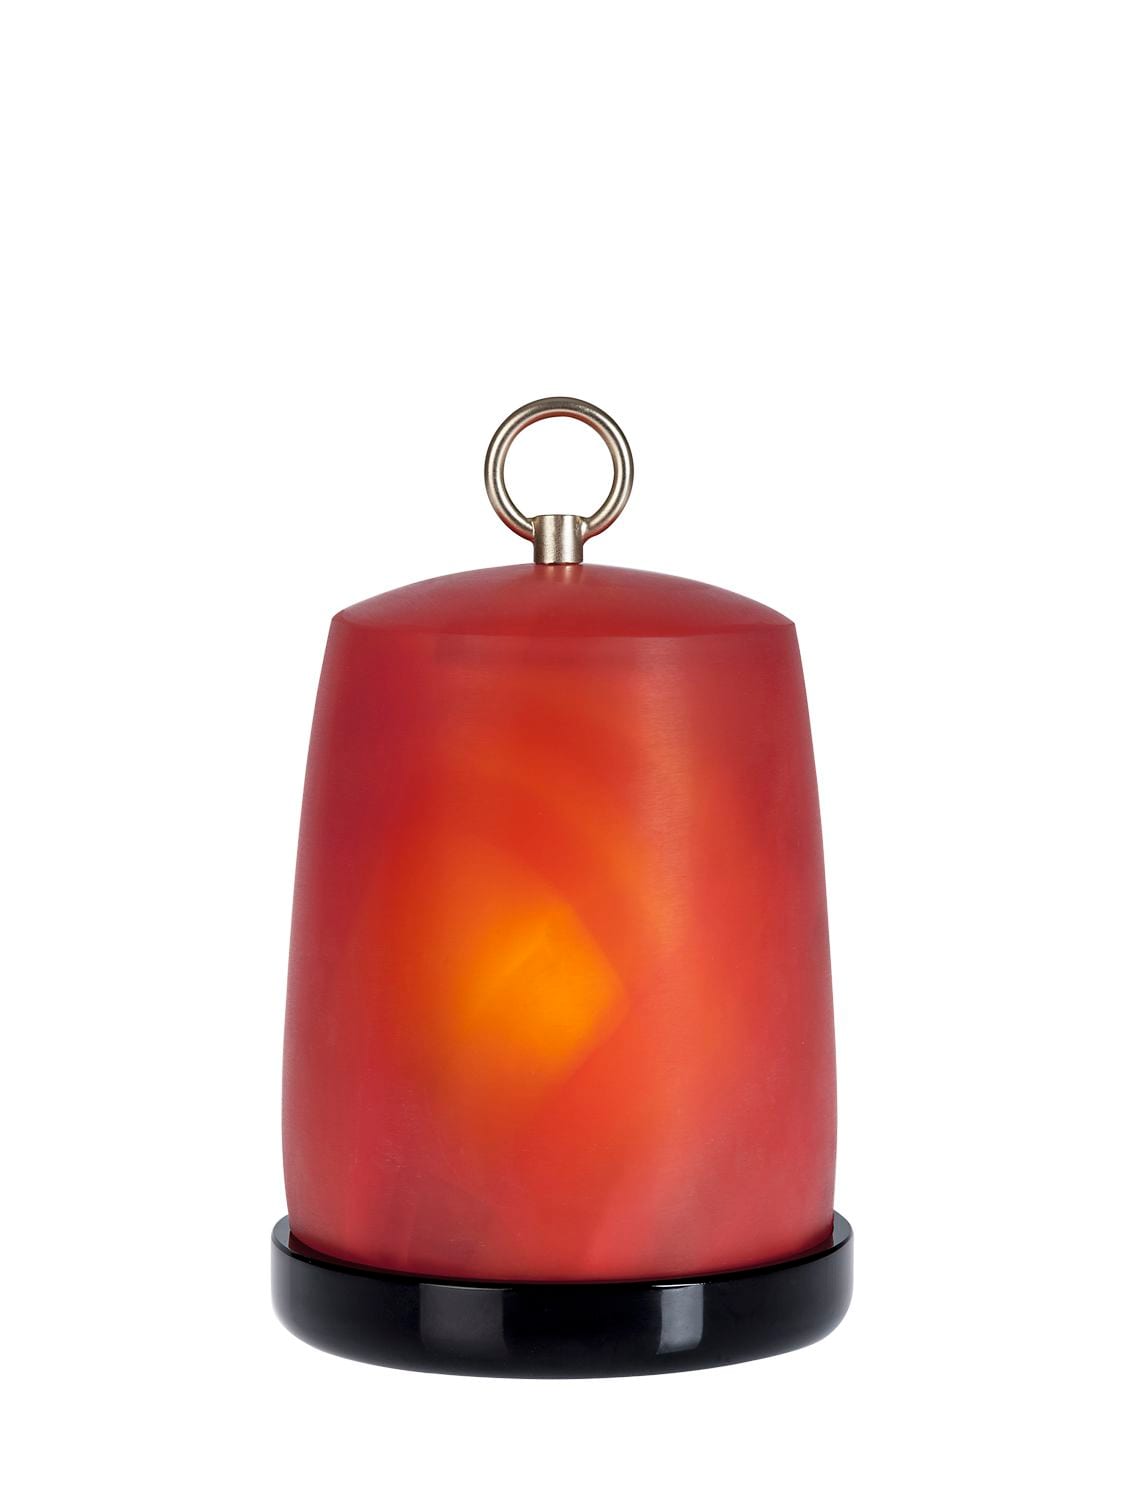 Armani/casa Hack Murano Glass Tealight Holder In Red